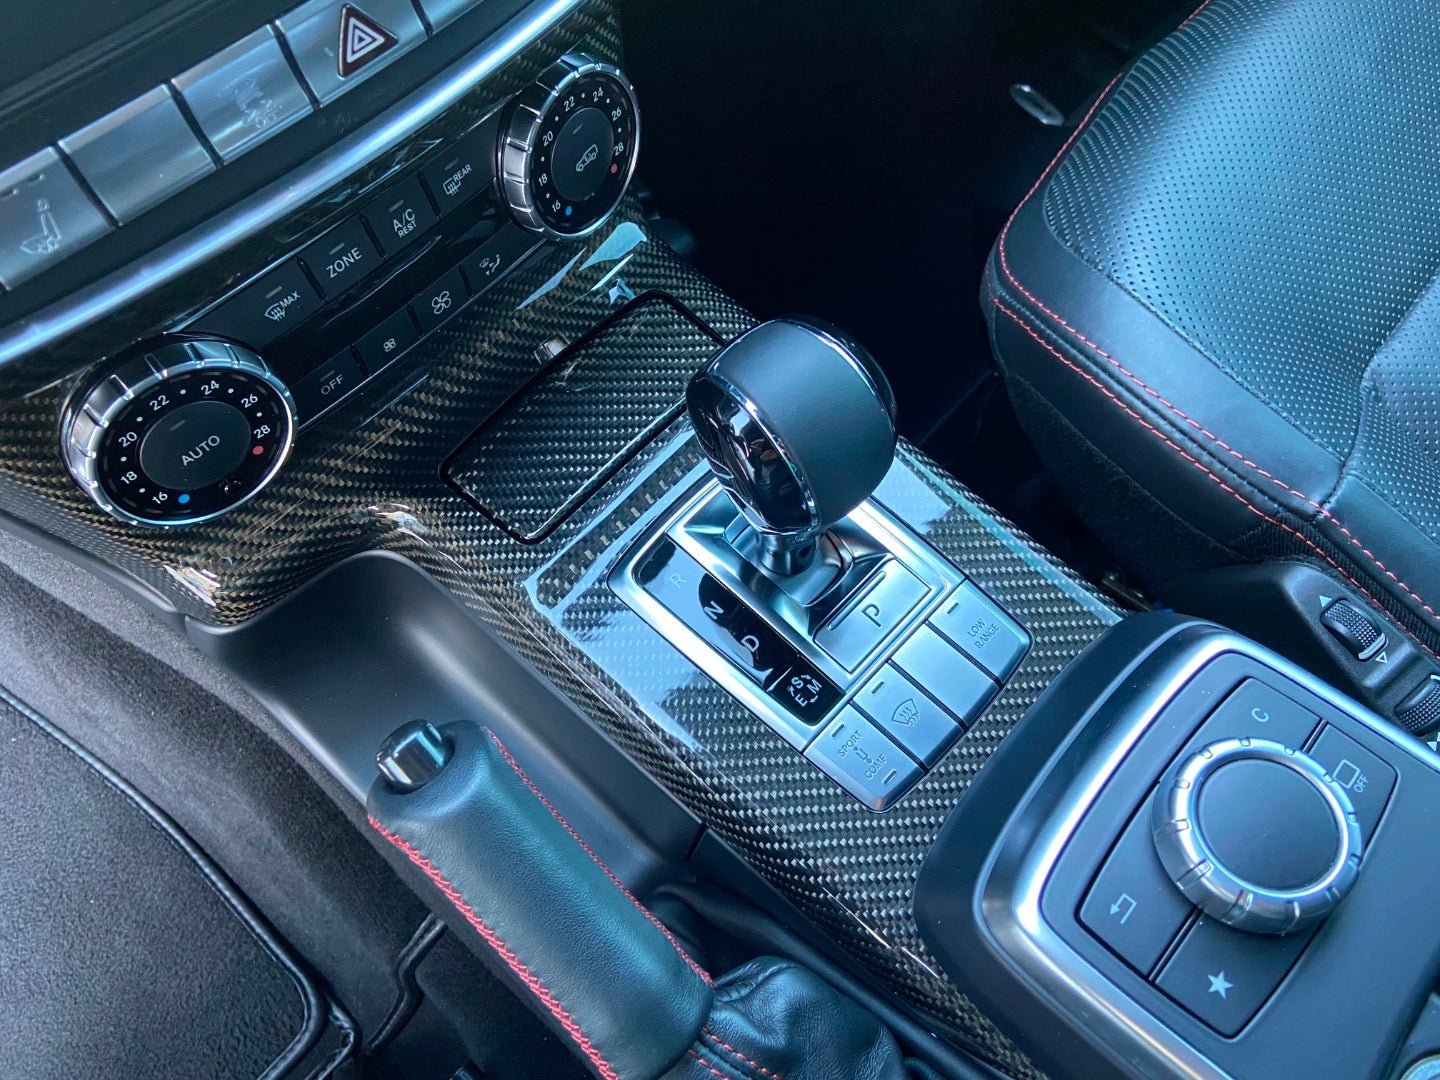 Reemplazo de molduras de paneles de tablero interior de fibra de carbono para Mercedes-Benz W463